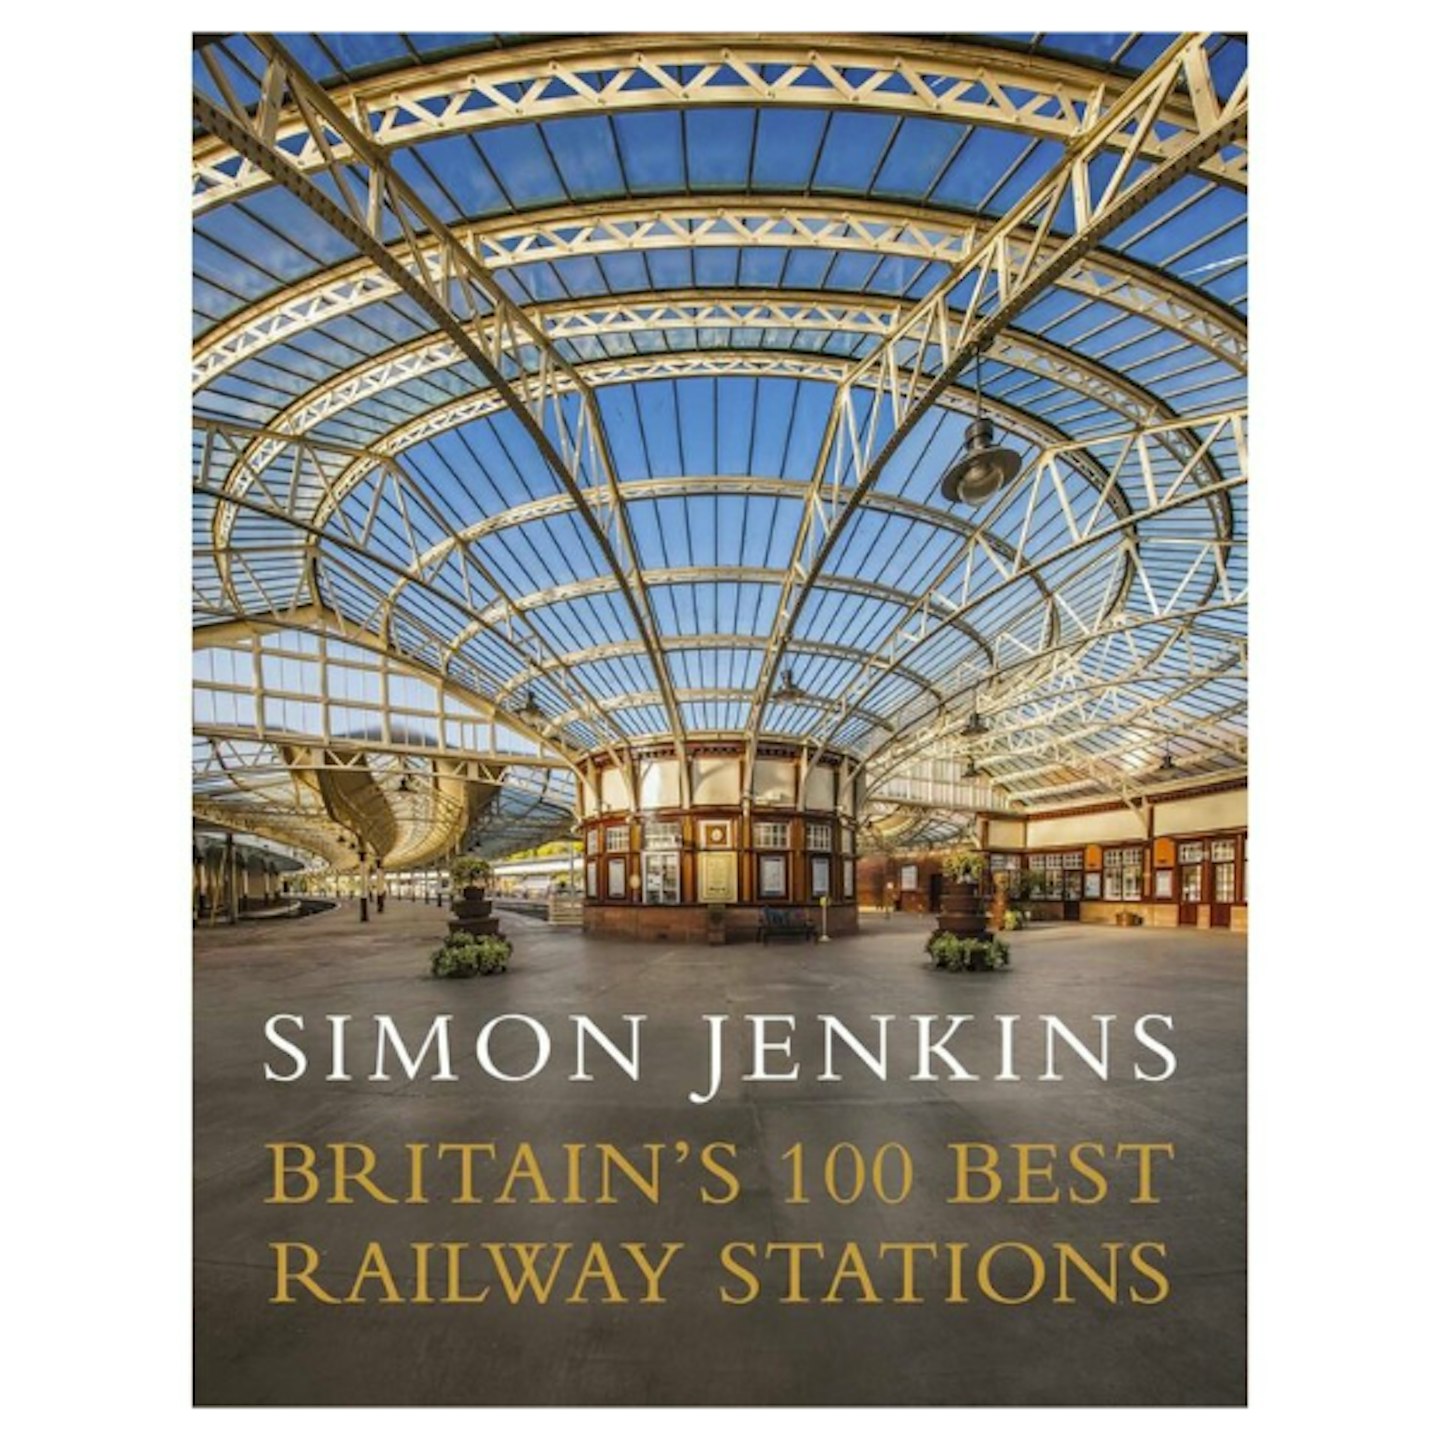 Britainu2019s 100 Best Railway Stations, u00a318.40, amazon.co.uk